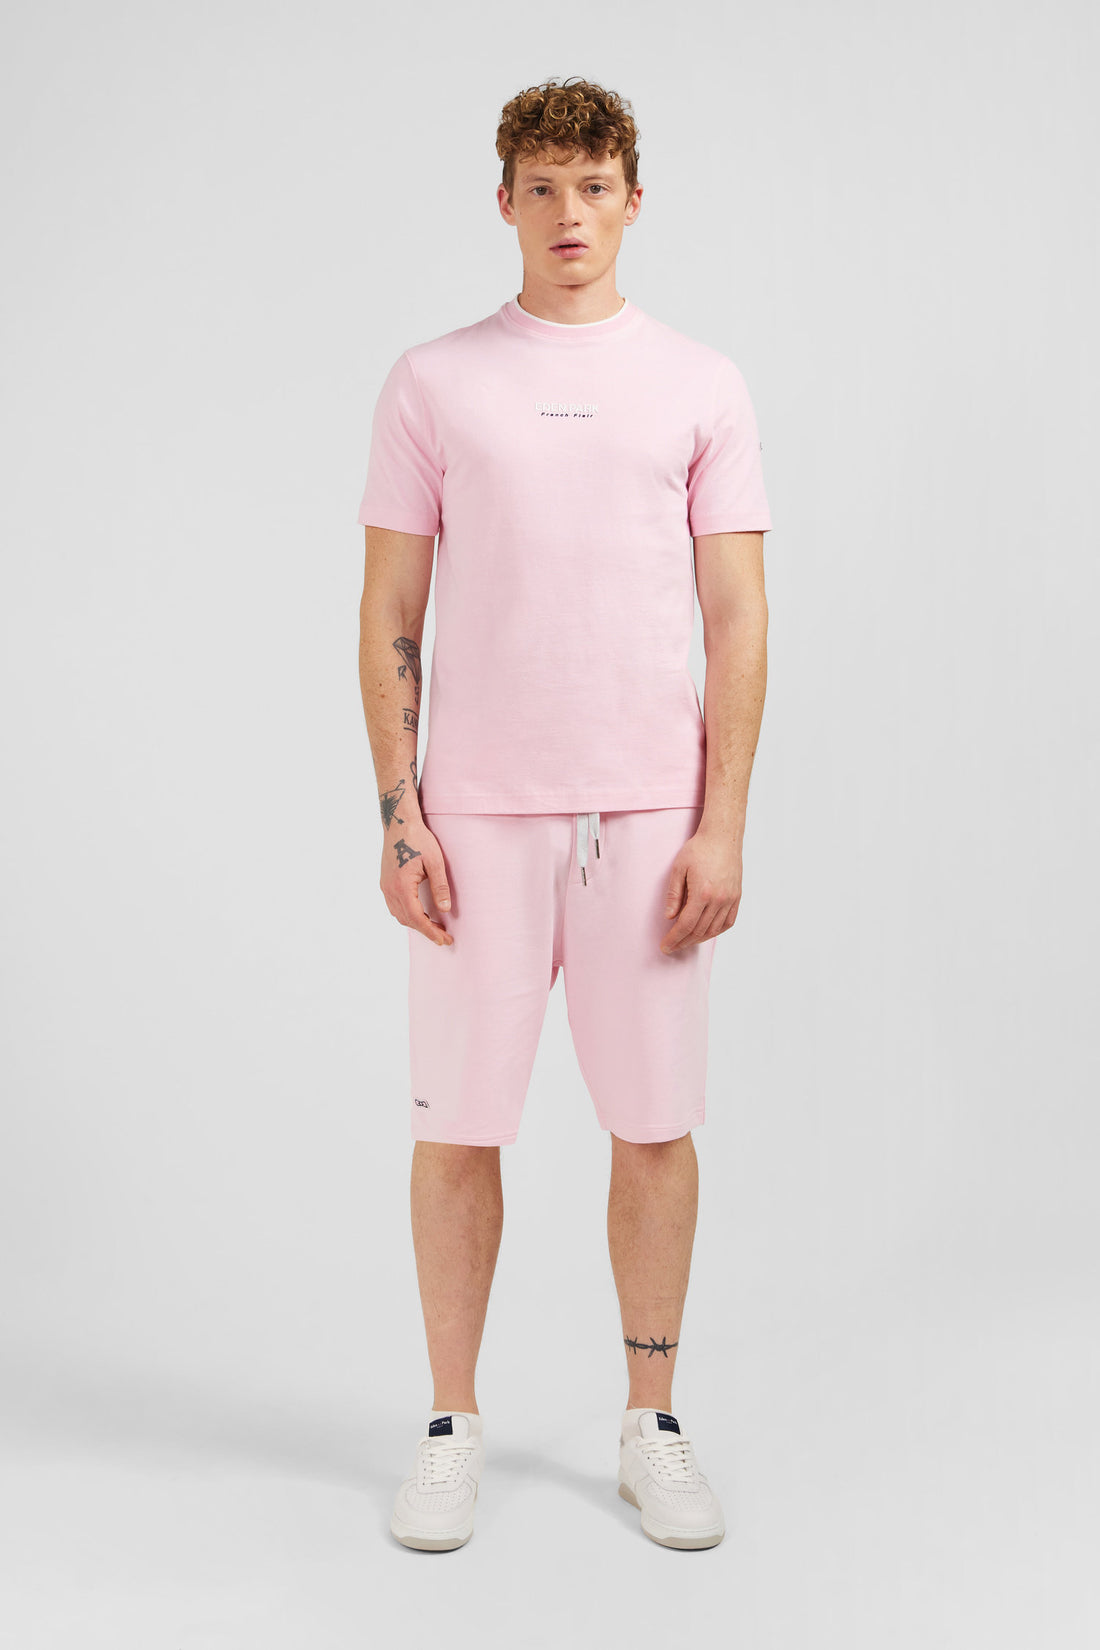 Plain Pink Short-Sleeved T-Shirt_E24MAITC0018_ROC16_01